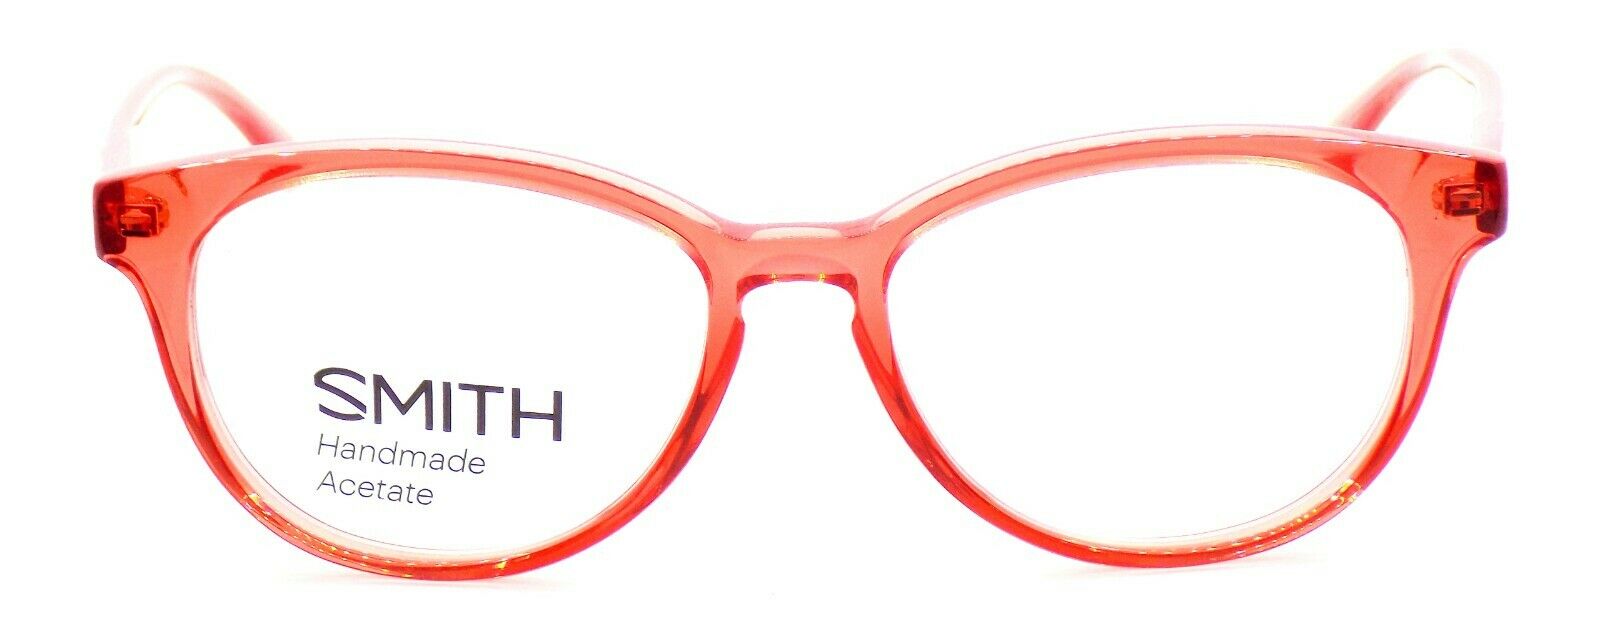 2-SMITH Optics Finley 5M9 Women's Eyeglasses Frames 51-16-140 Crystal Red + CASE-716737716403-IKSpecs